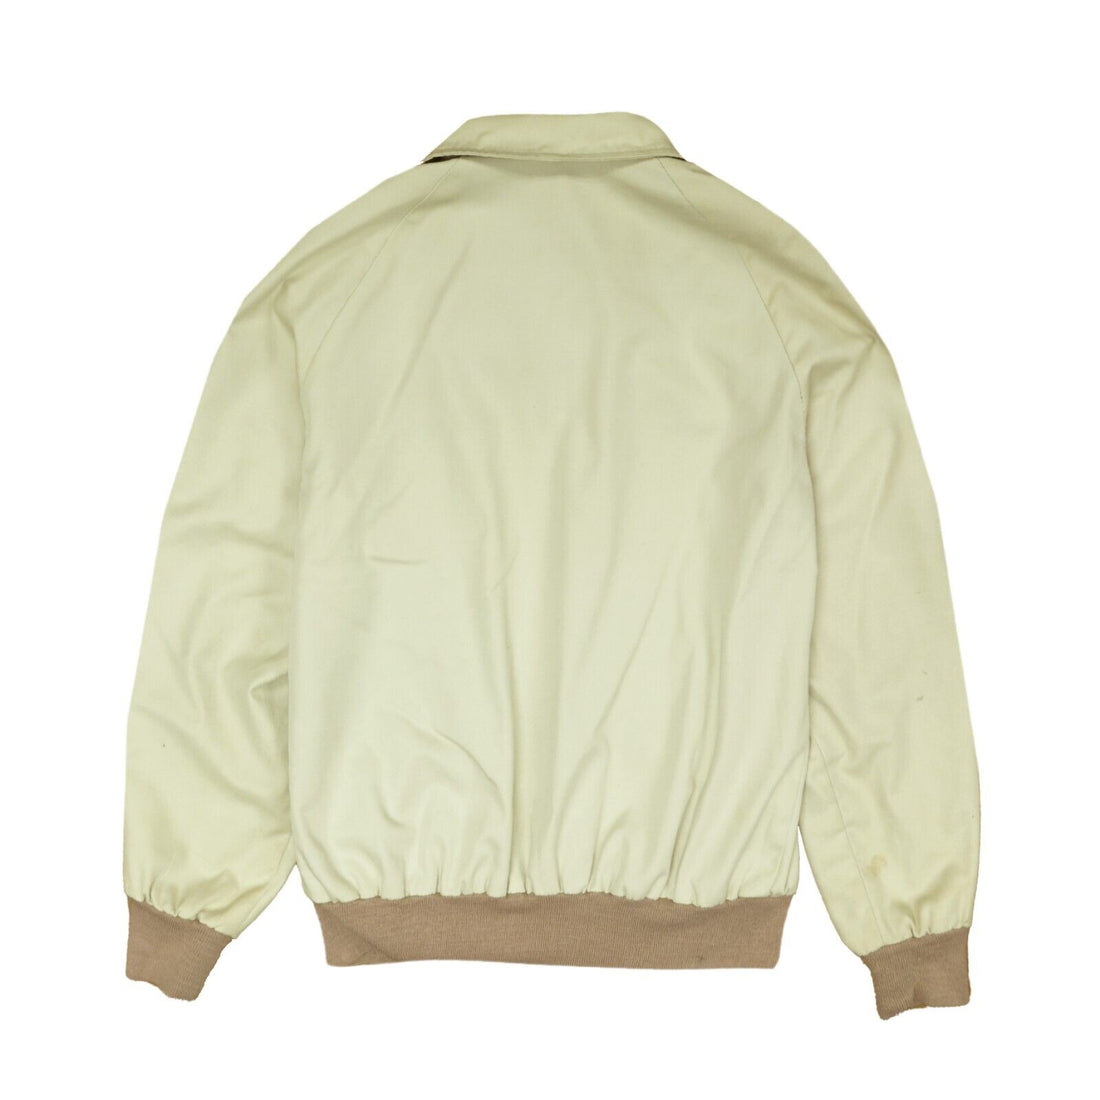 Vintage Harrington Bomber Coat Jacket Size Large Beige Cream Pride Zip 90s